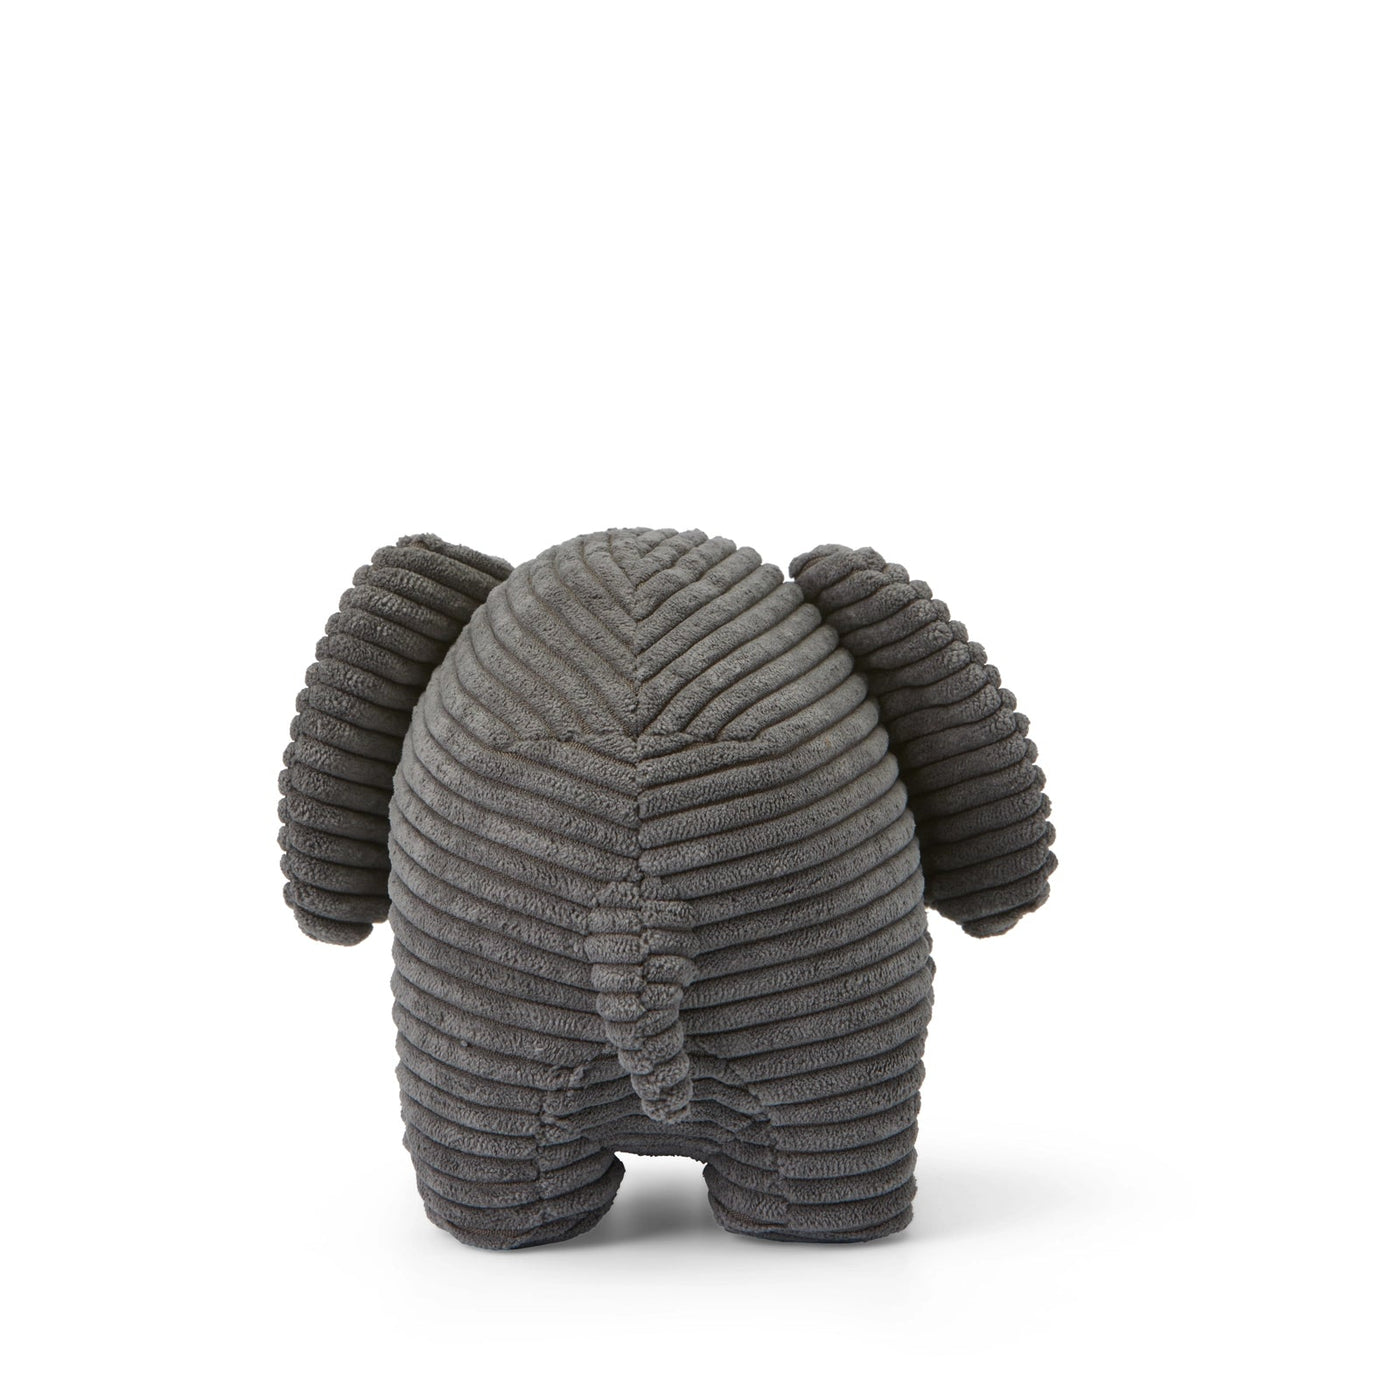 Miffy Elephant Corduroy Grey